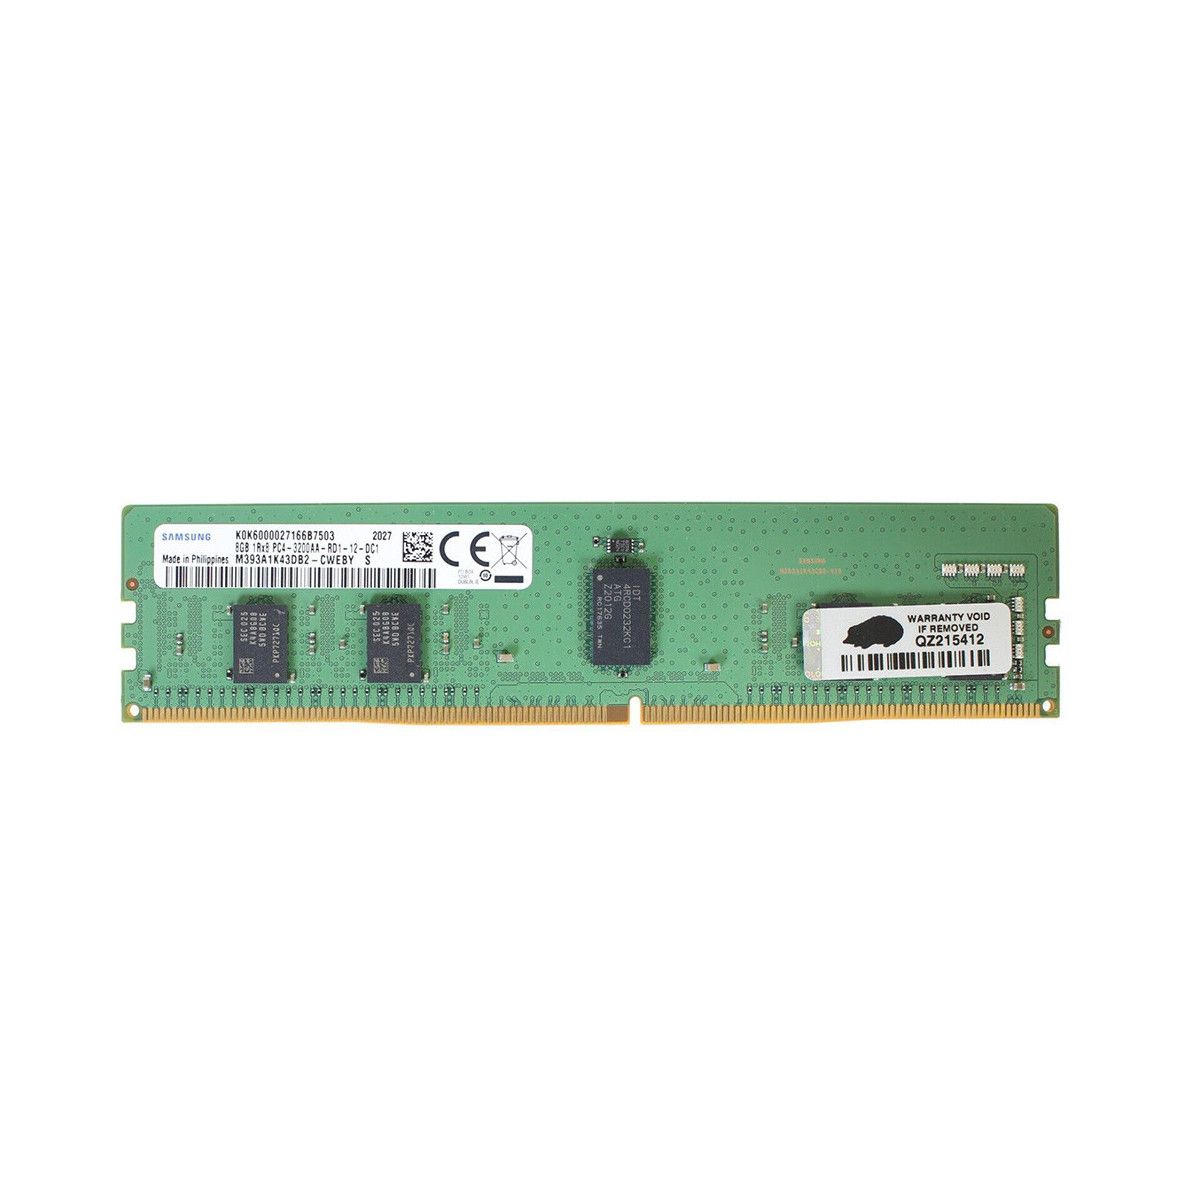 AB214250-MS - Memstar 1x 8GB DDR4-3200 RDIMM PC4-25600R - OEM compatible con Mem-Star Memoria 1 - Memstar 